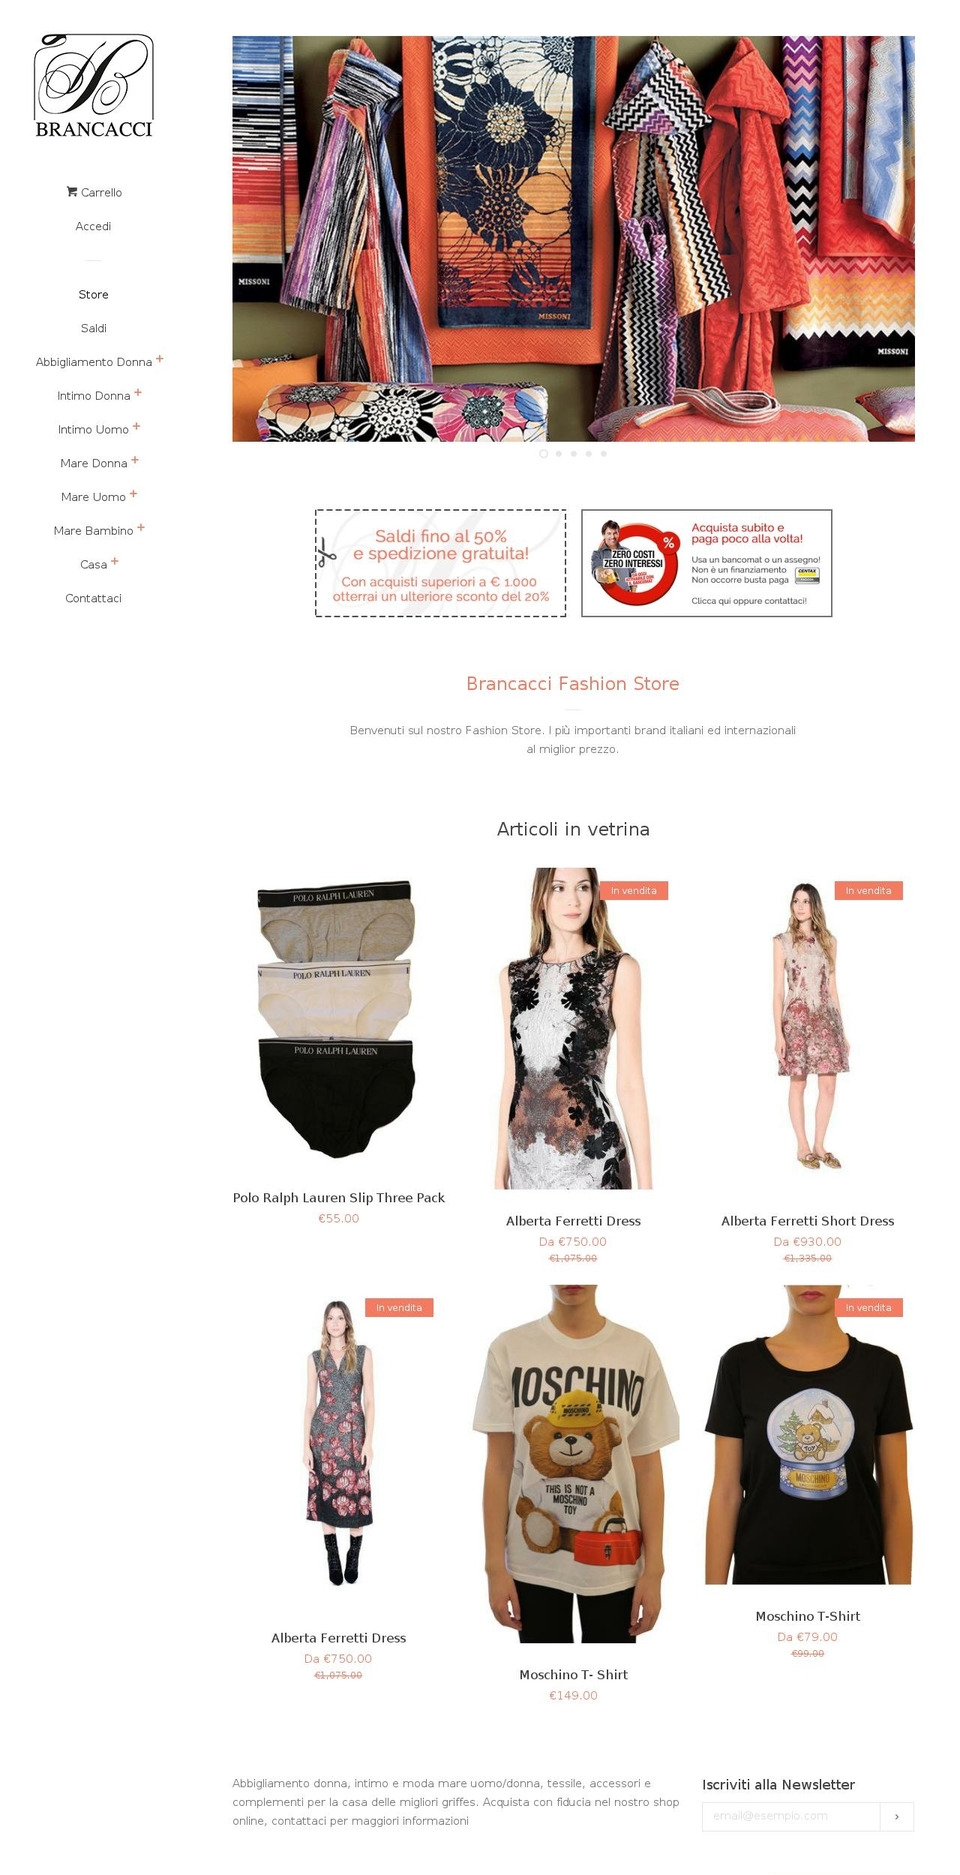 brancacci.it shopify website screenshot